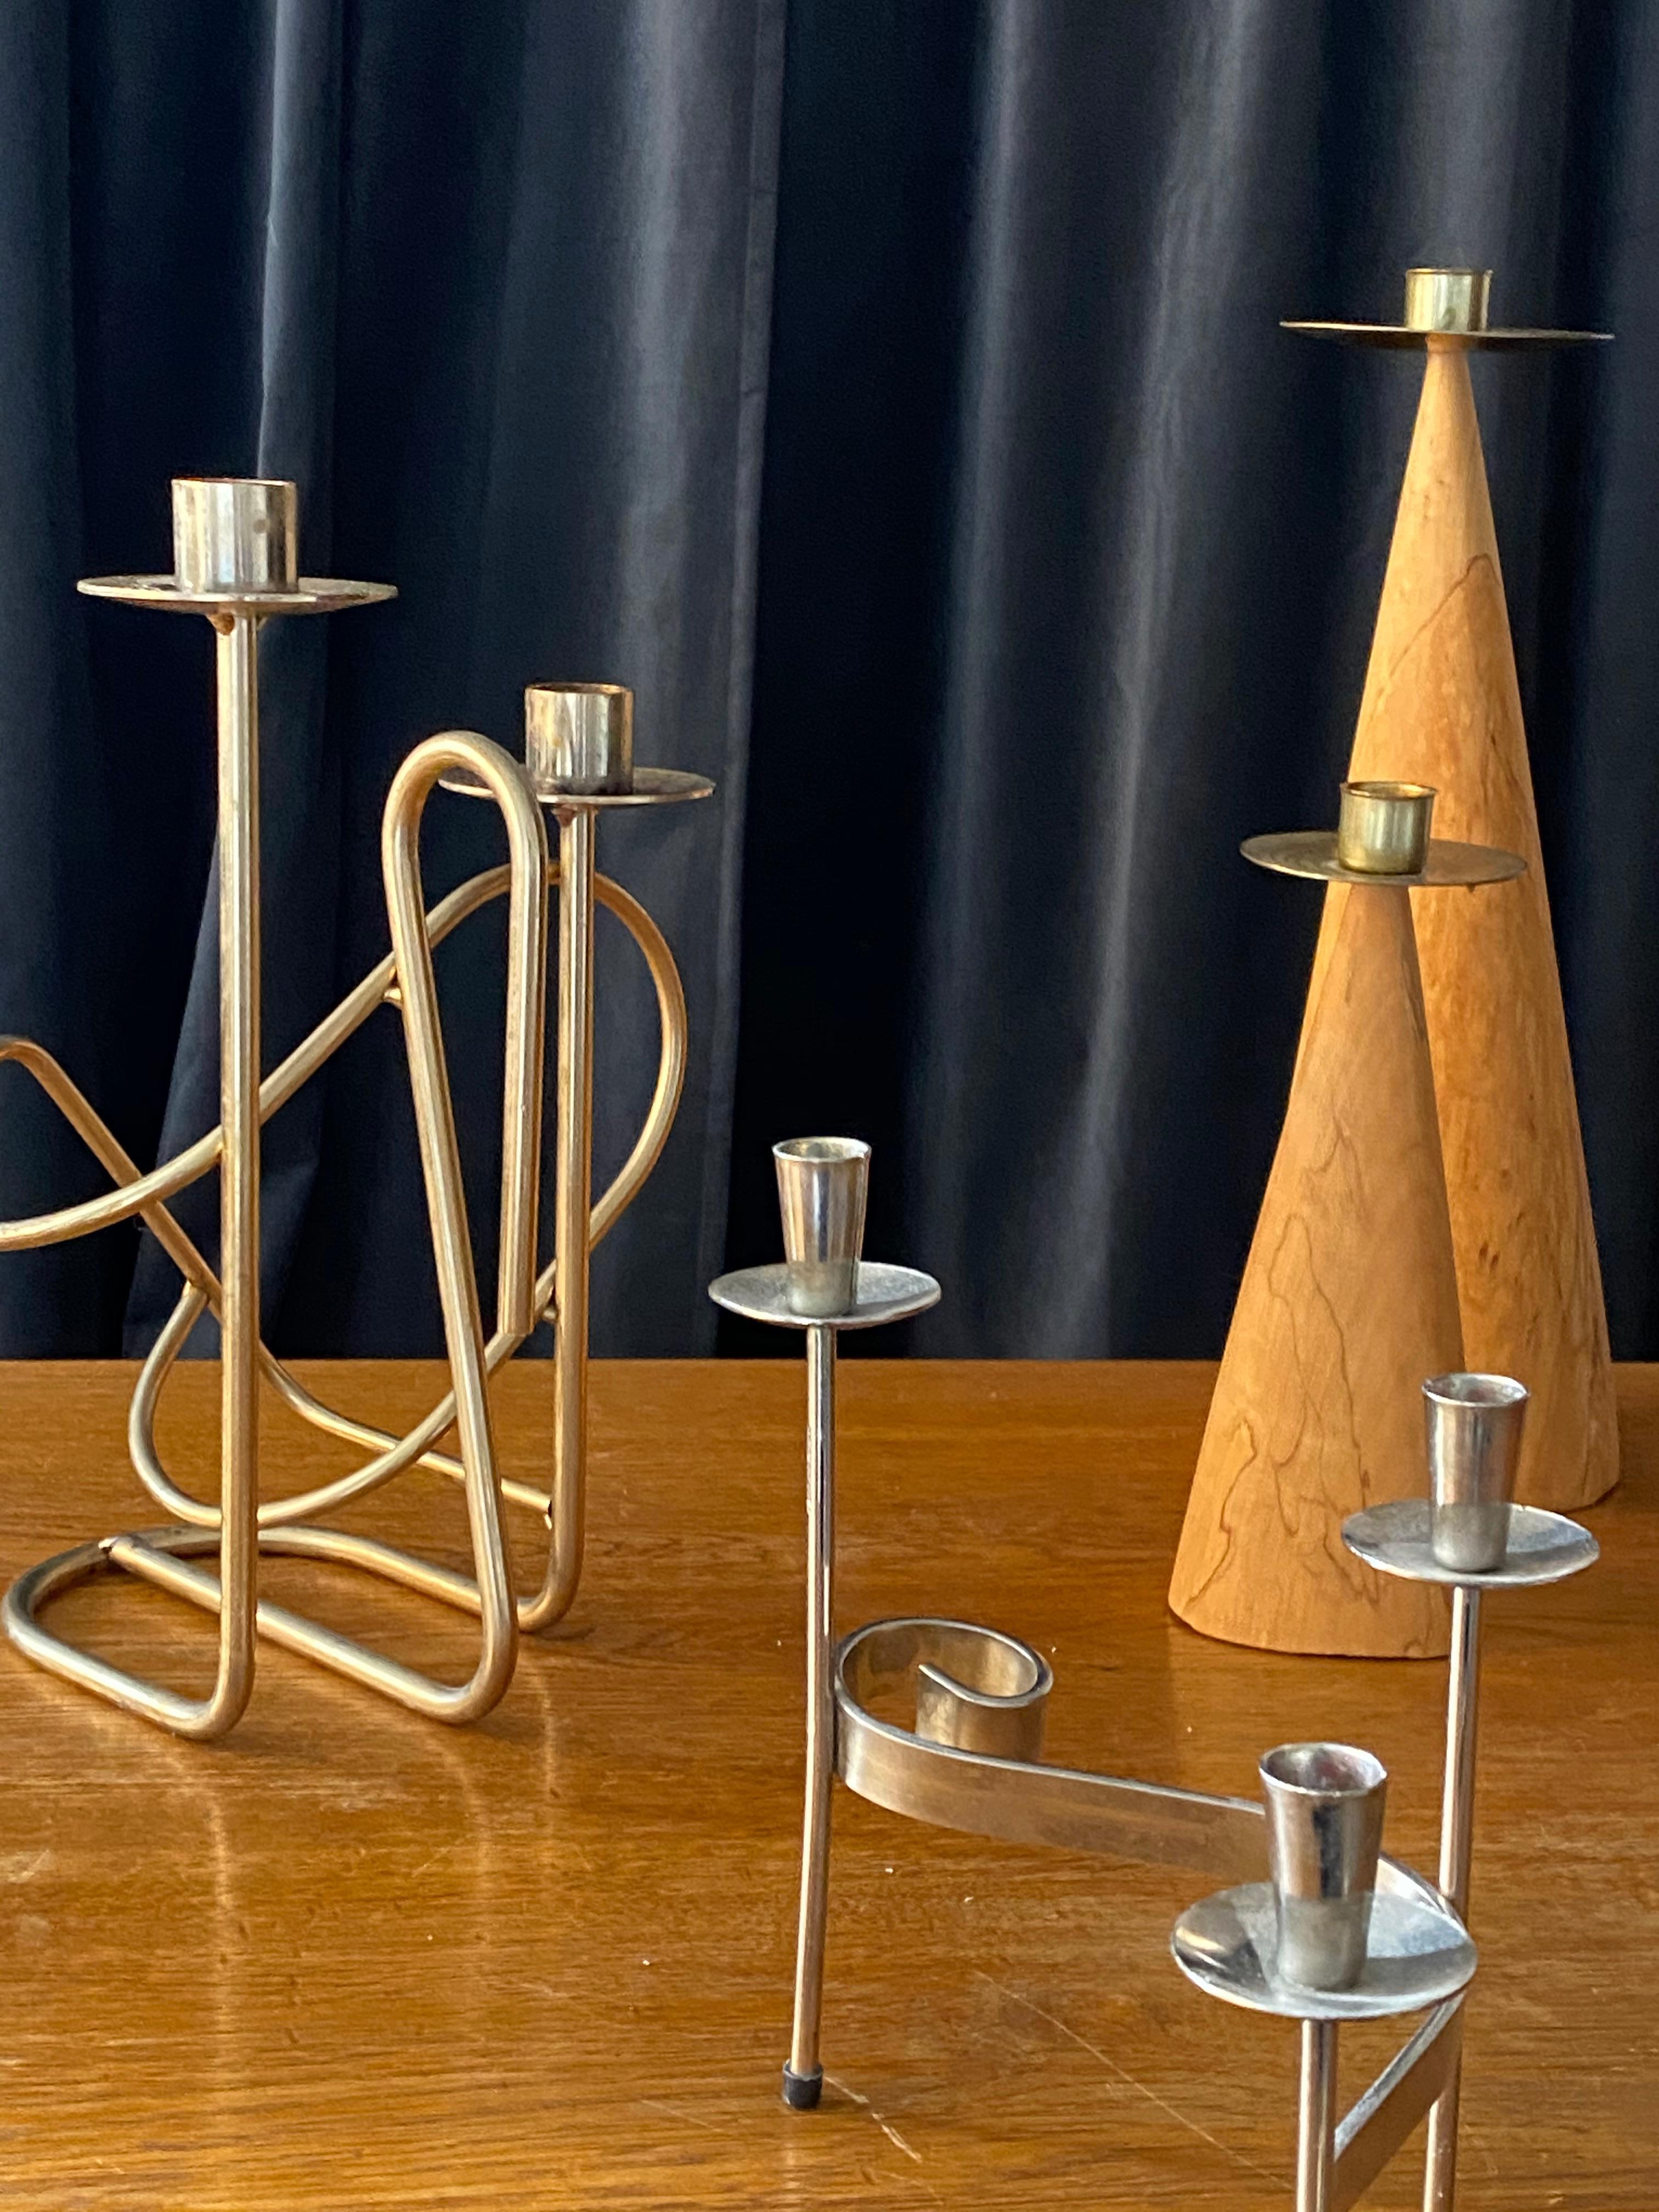 Metal Swedish Design, Collection of Candlesticks or Candelabra, Wood, Brass, Steel